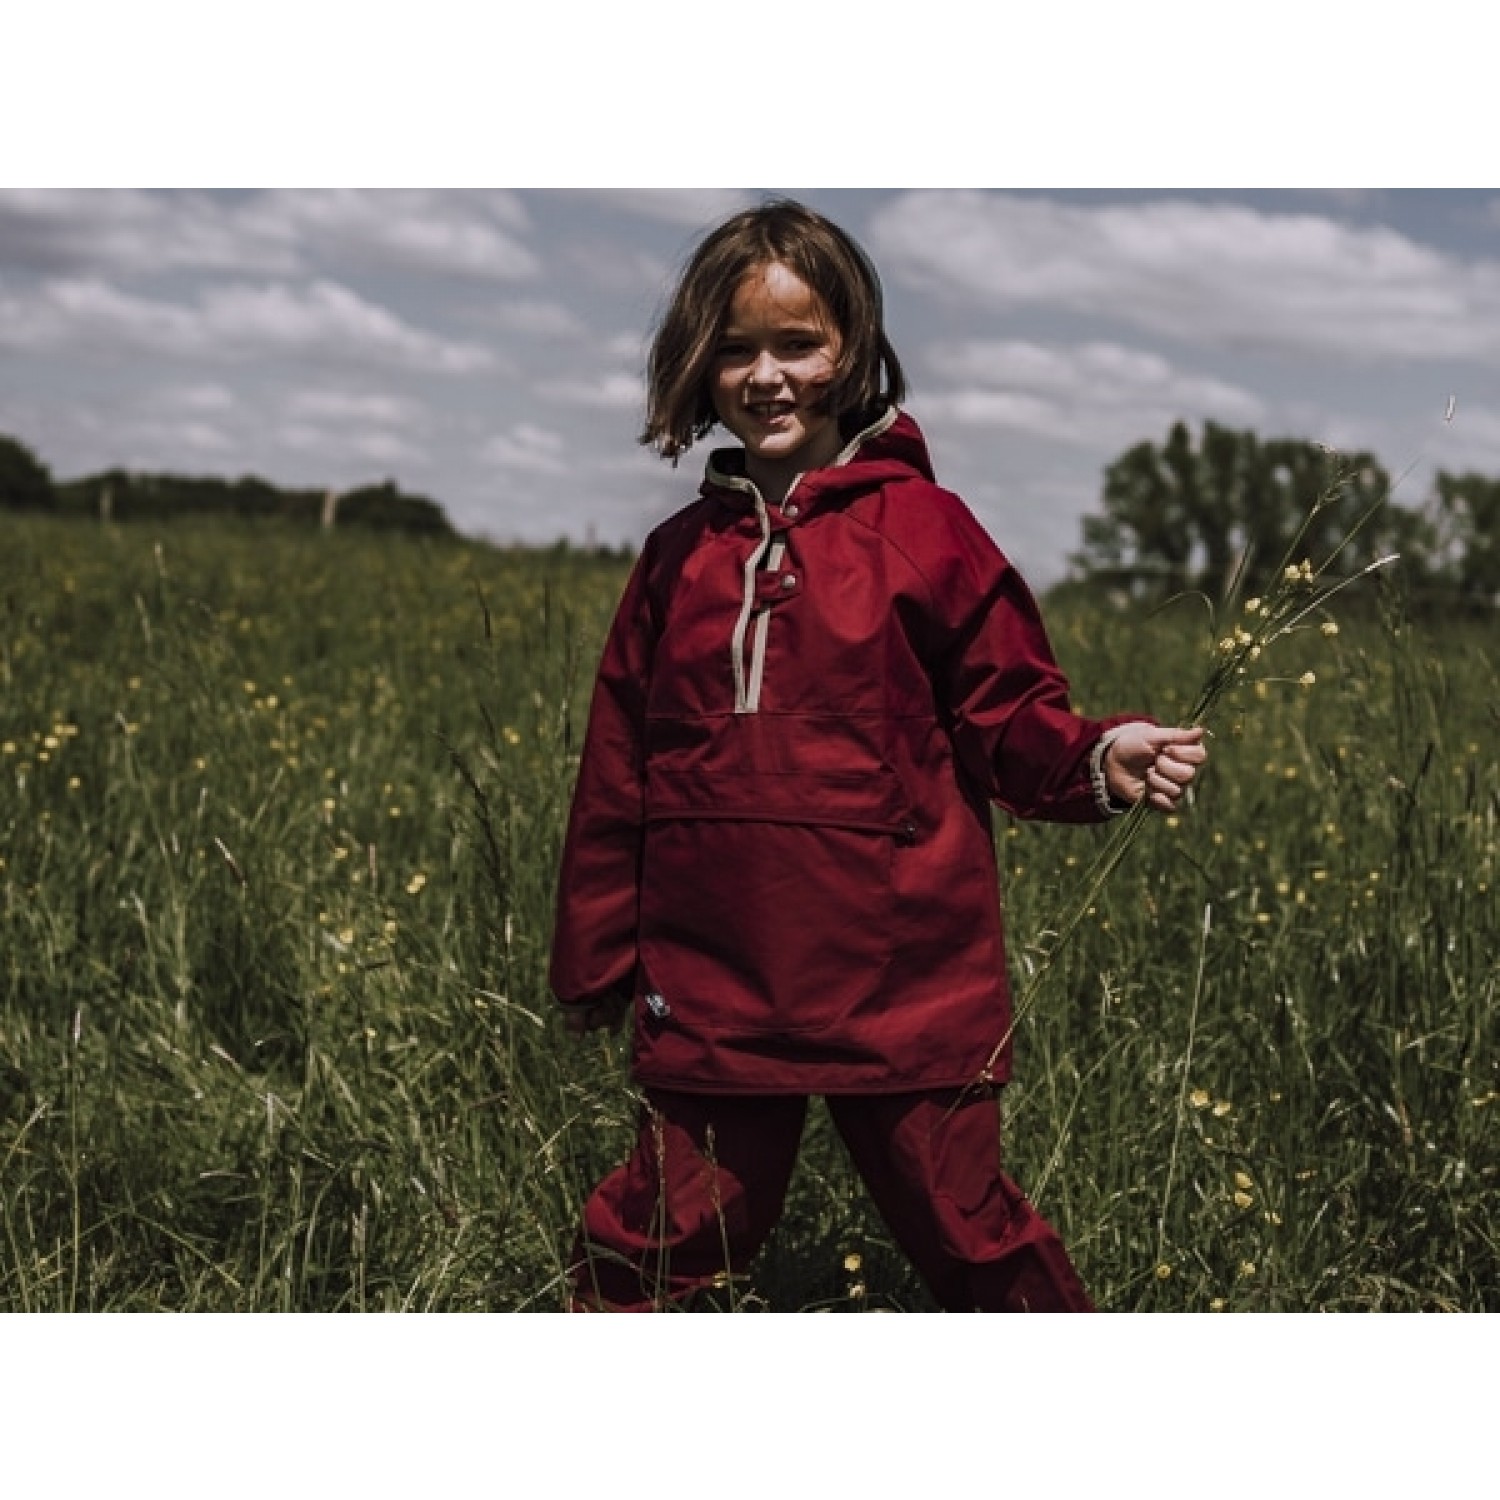 Allwetter-Jacke für Kinder, EtaProof Bio-Baumwolle, beere | Ulalü